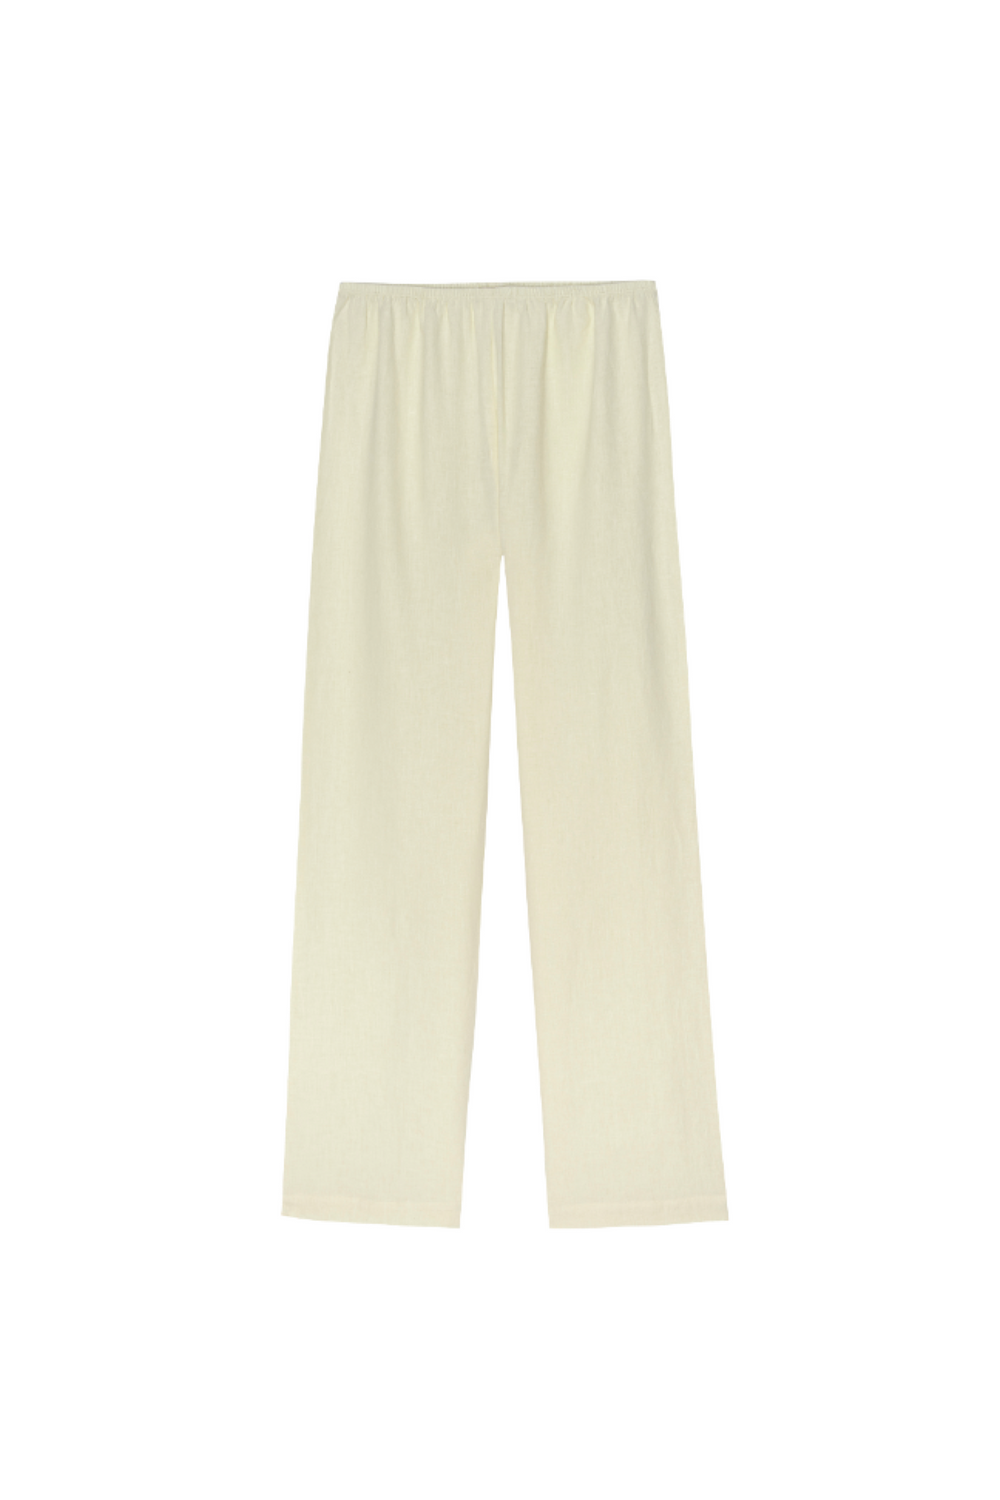 Cream Linen Simple Pant